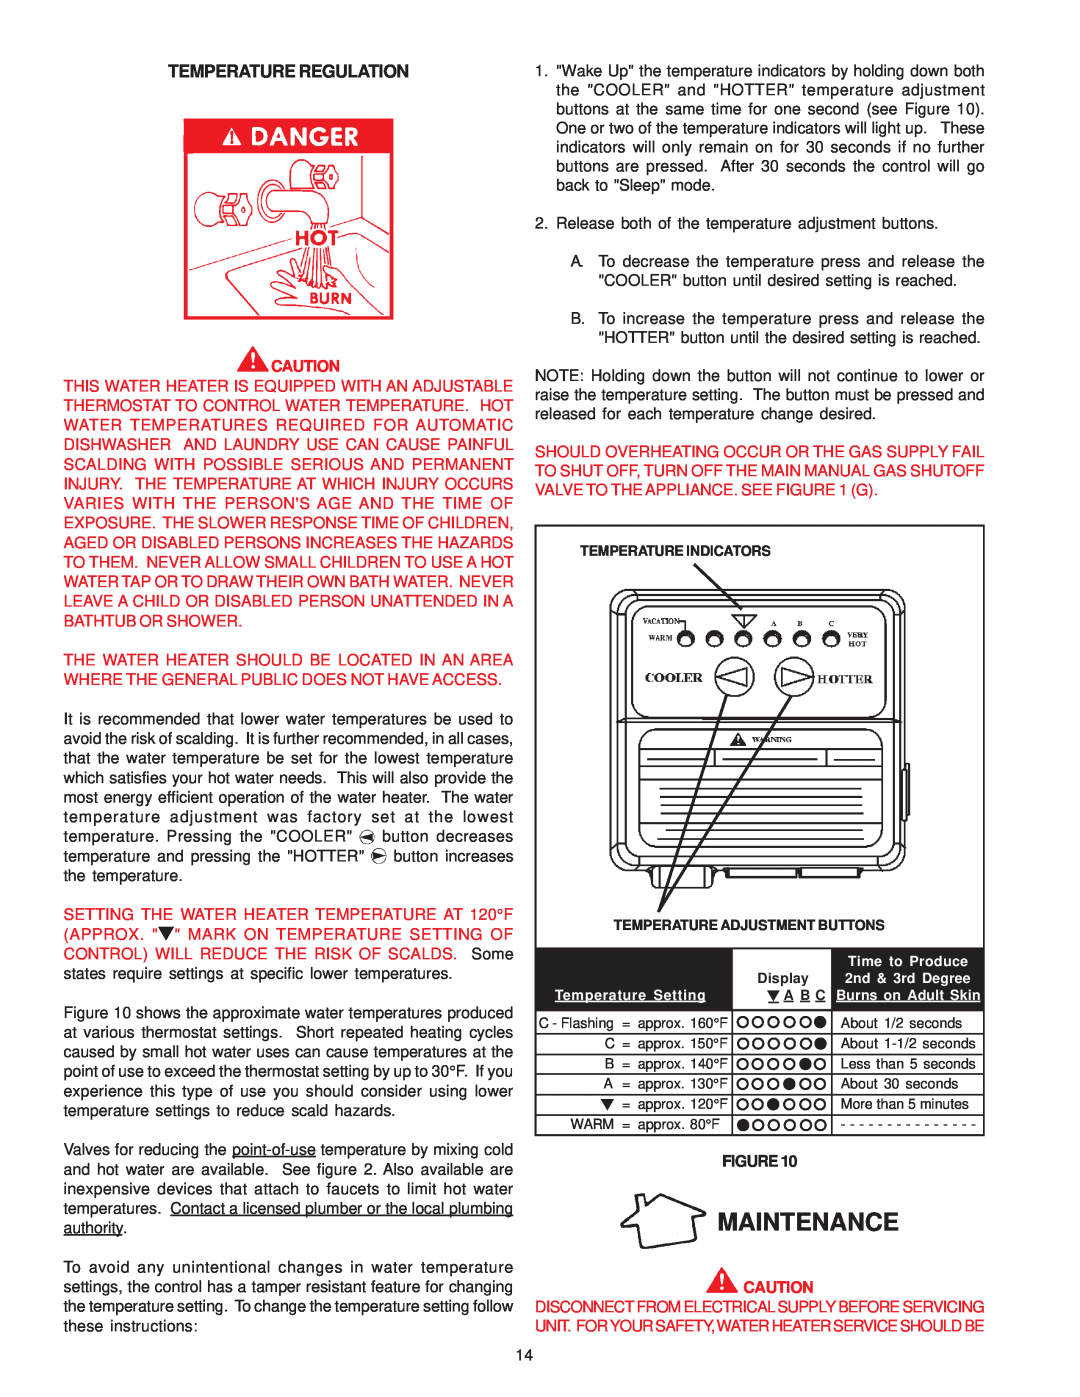 A.O. Smith GPS-75 owner manual Maintenance, Temperature Regulation 